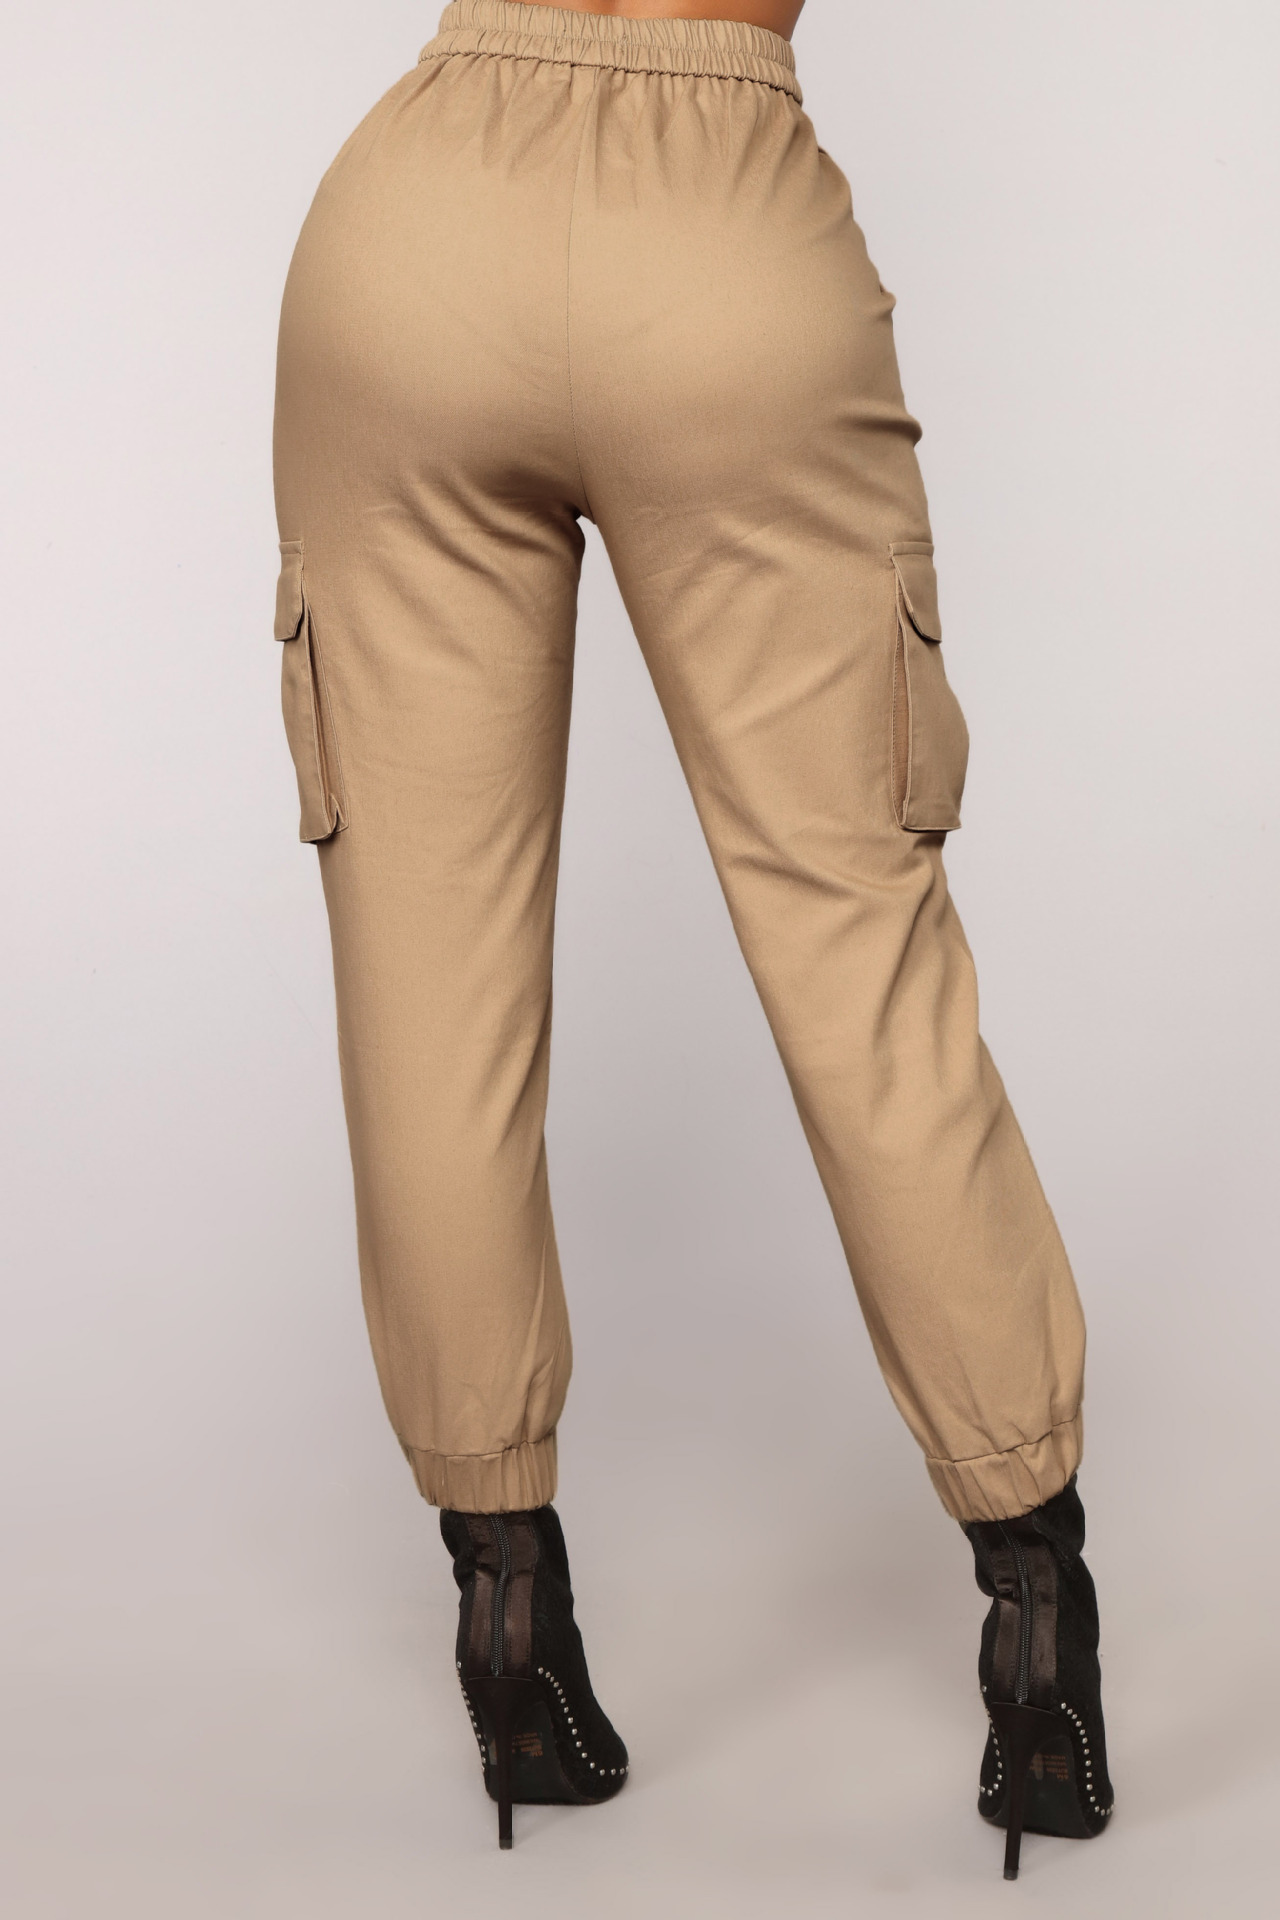 Unlimon New Personalized Cross Print Leggings Women's Pencil Pants D01513